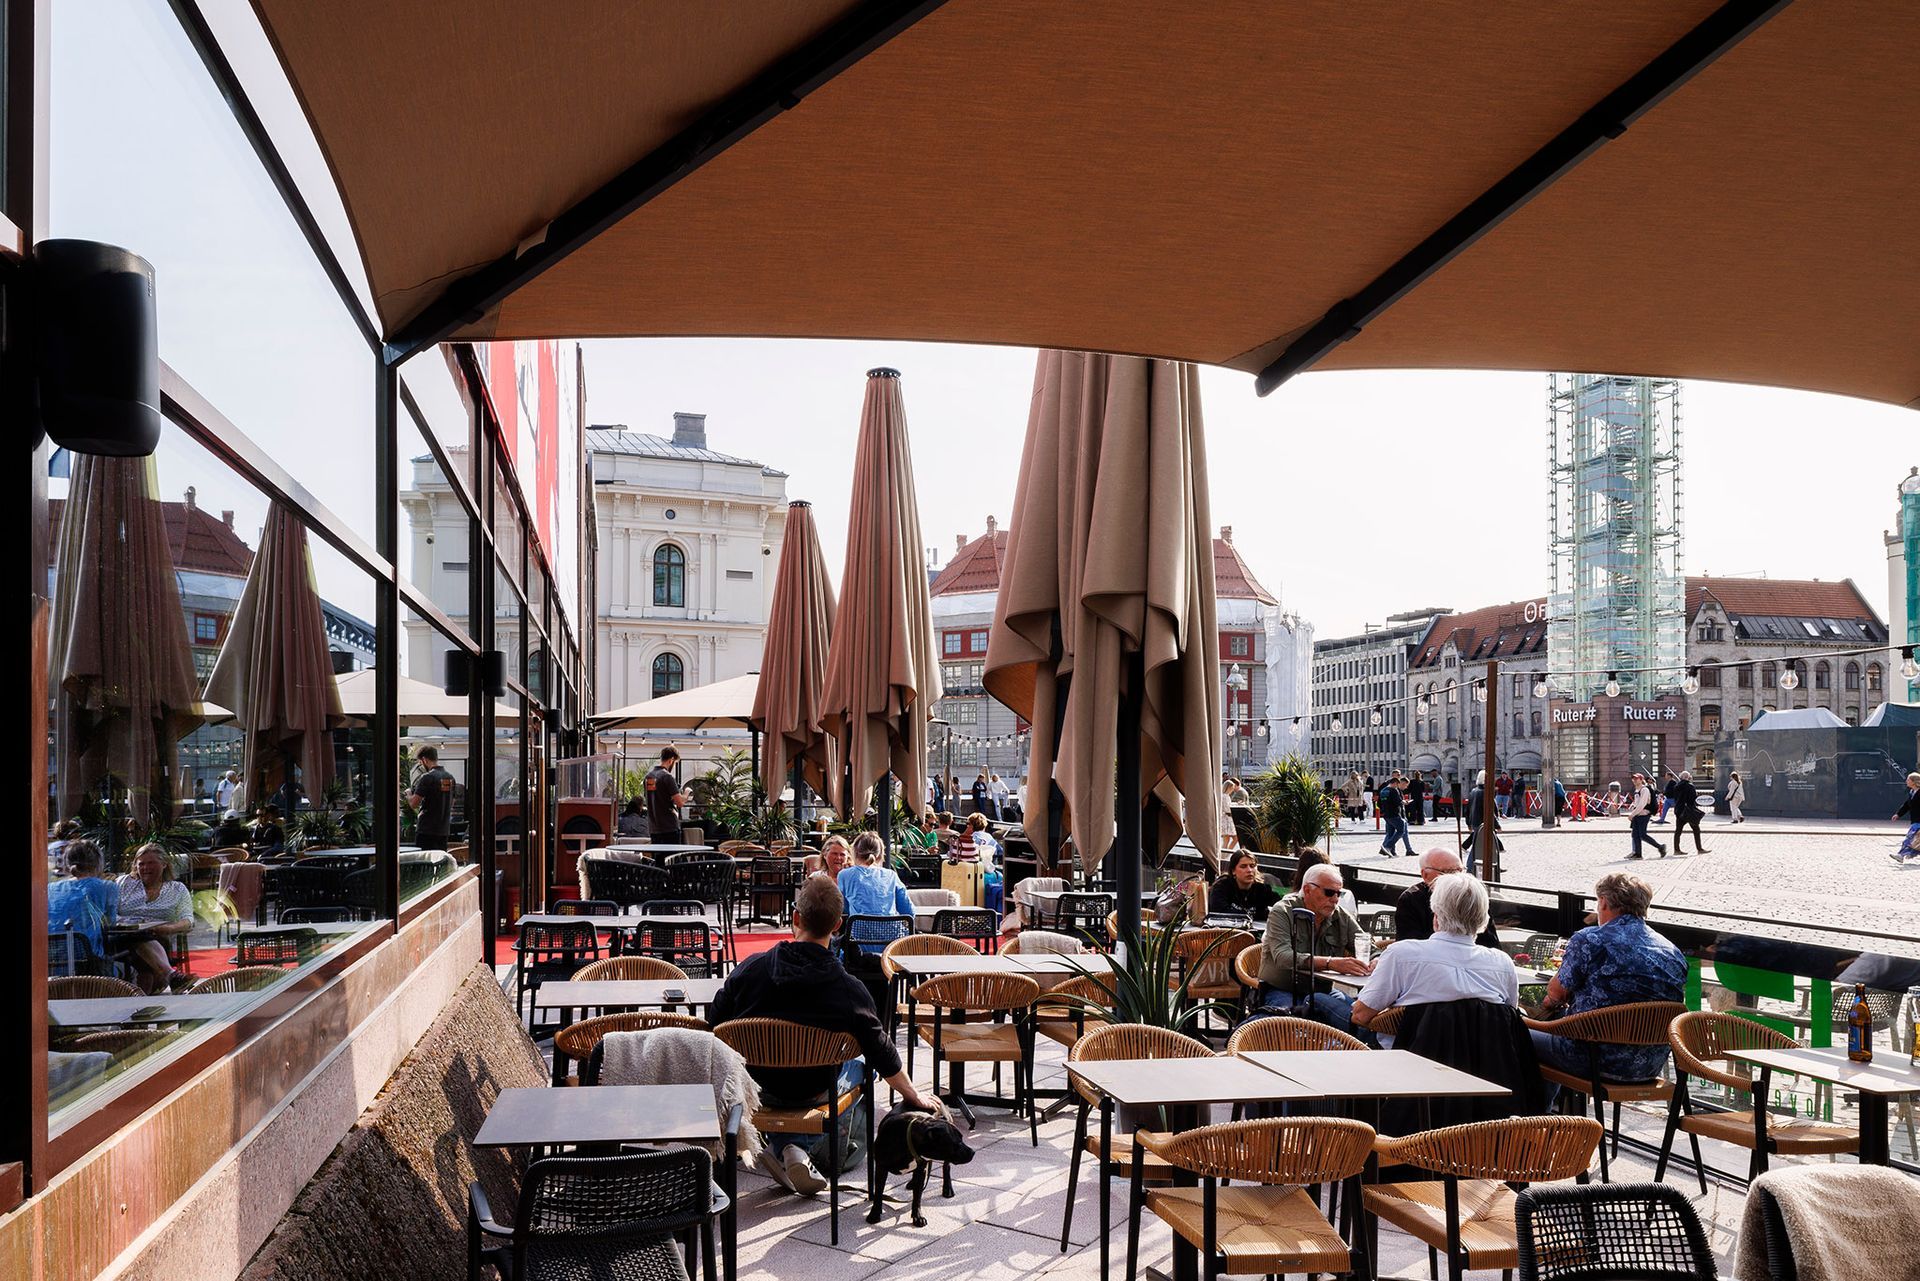 Restaurant patio facing the Oslo city center